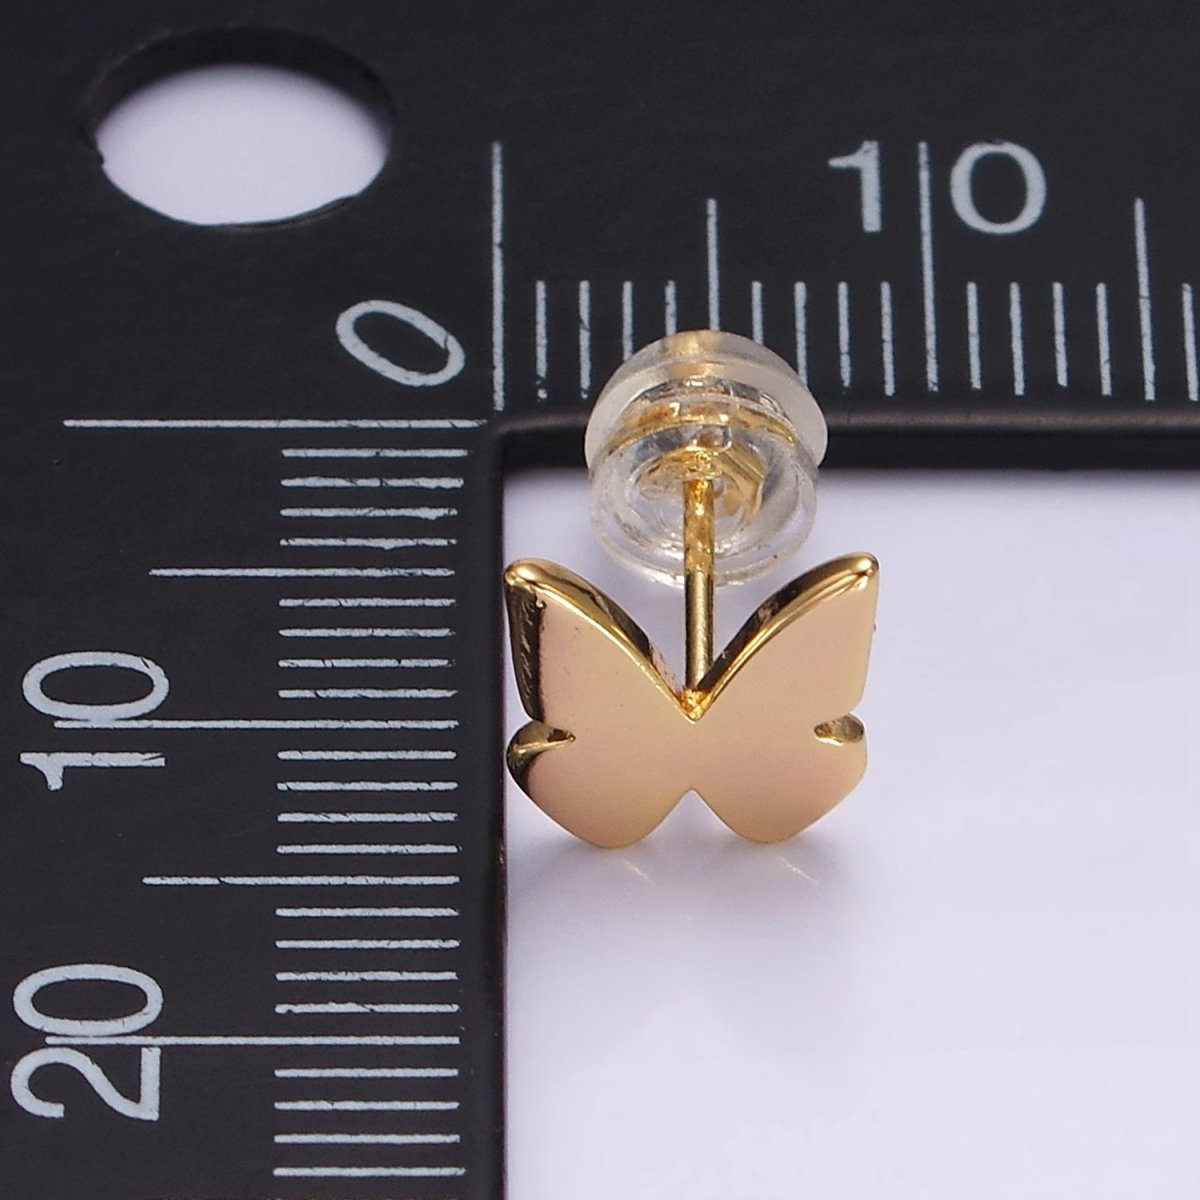 16K Gold Filled Mini Butterfly Mariposa Minimalist Stud Earrings | AE898 - DLUXCA